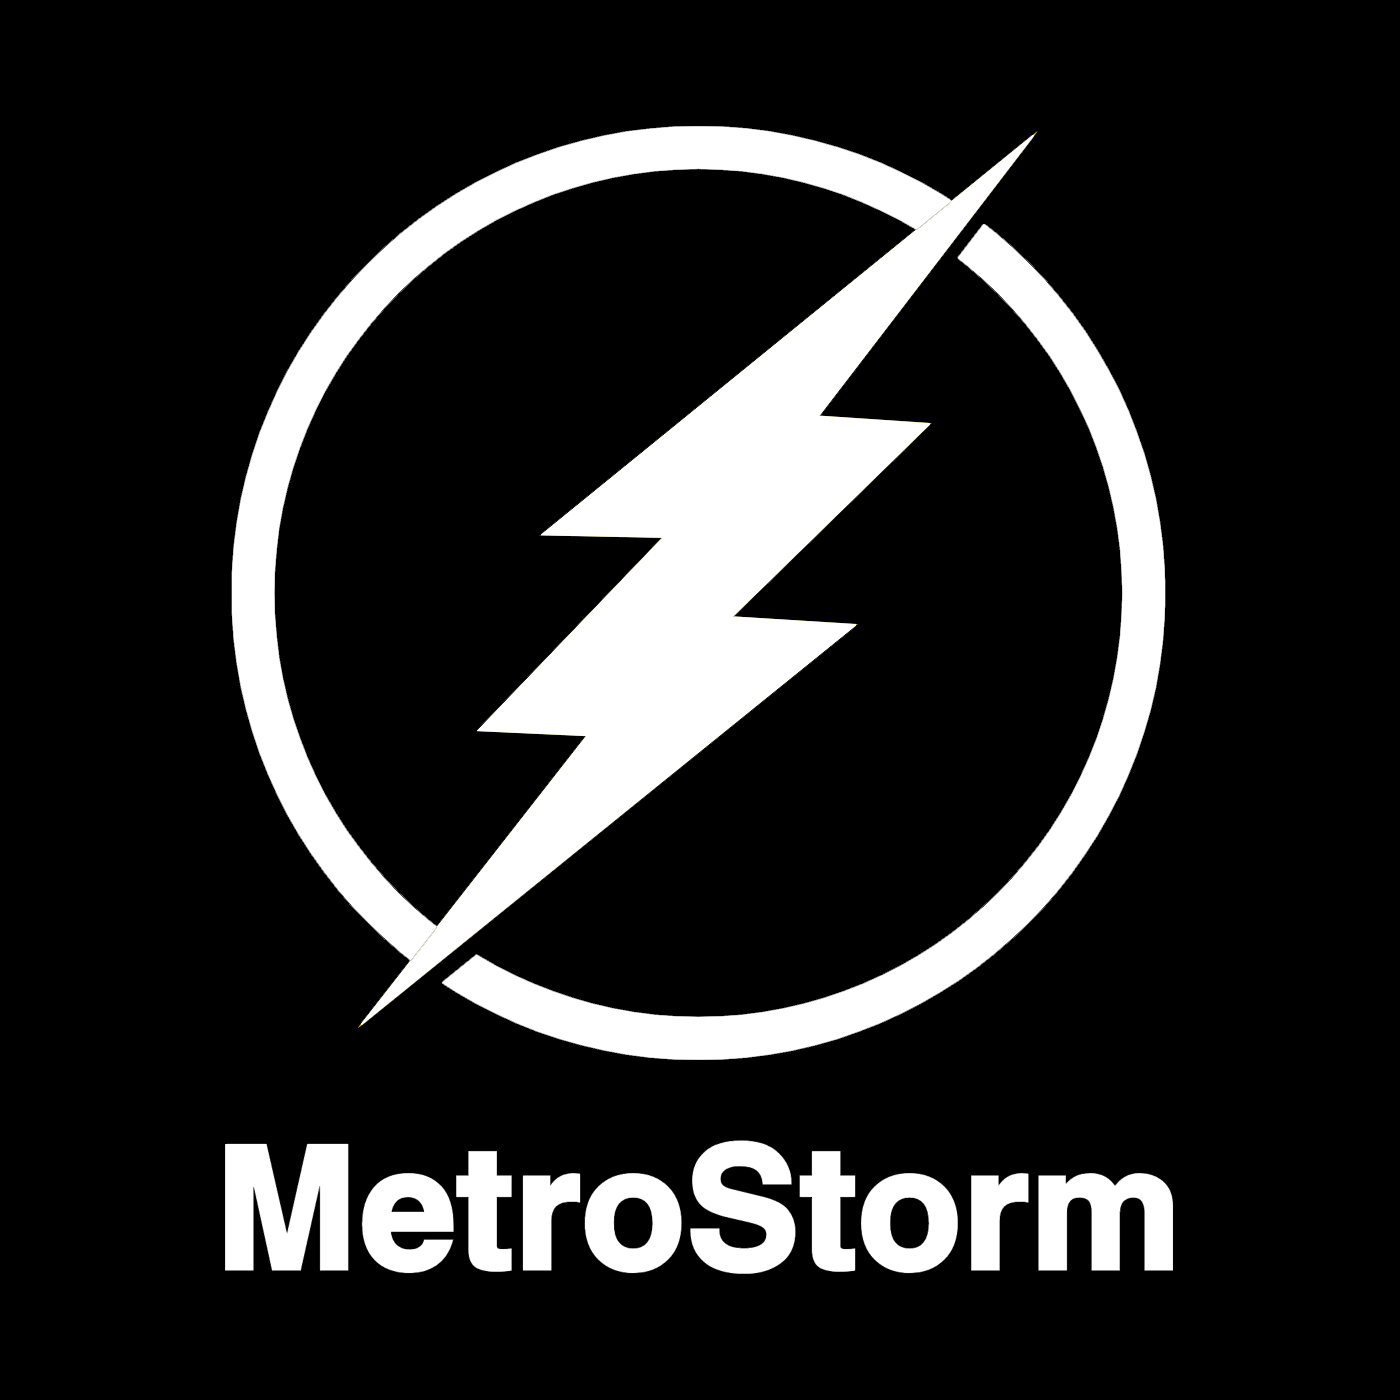 MetroStorm Newsletter ⚡️